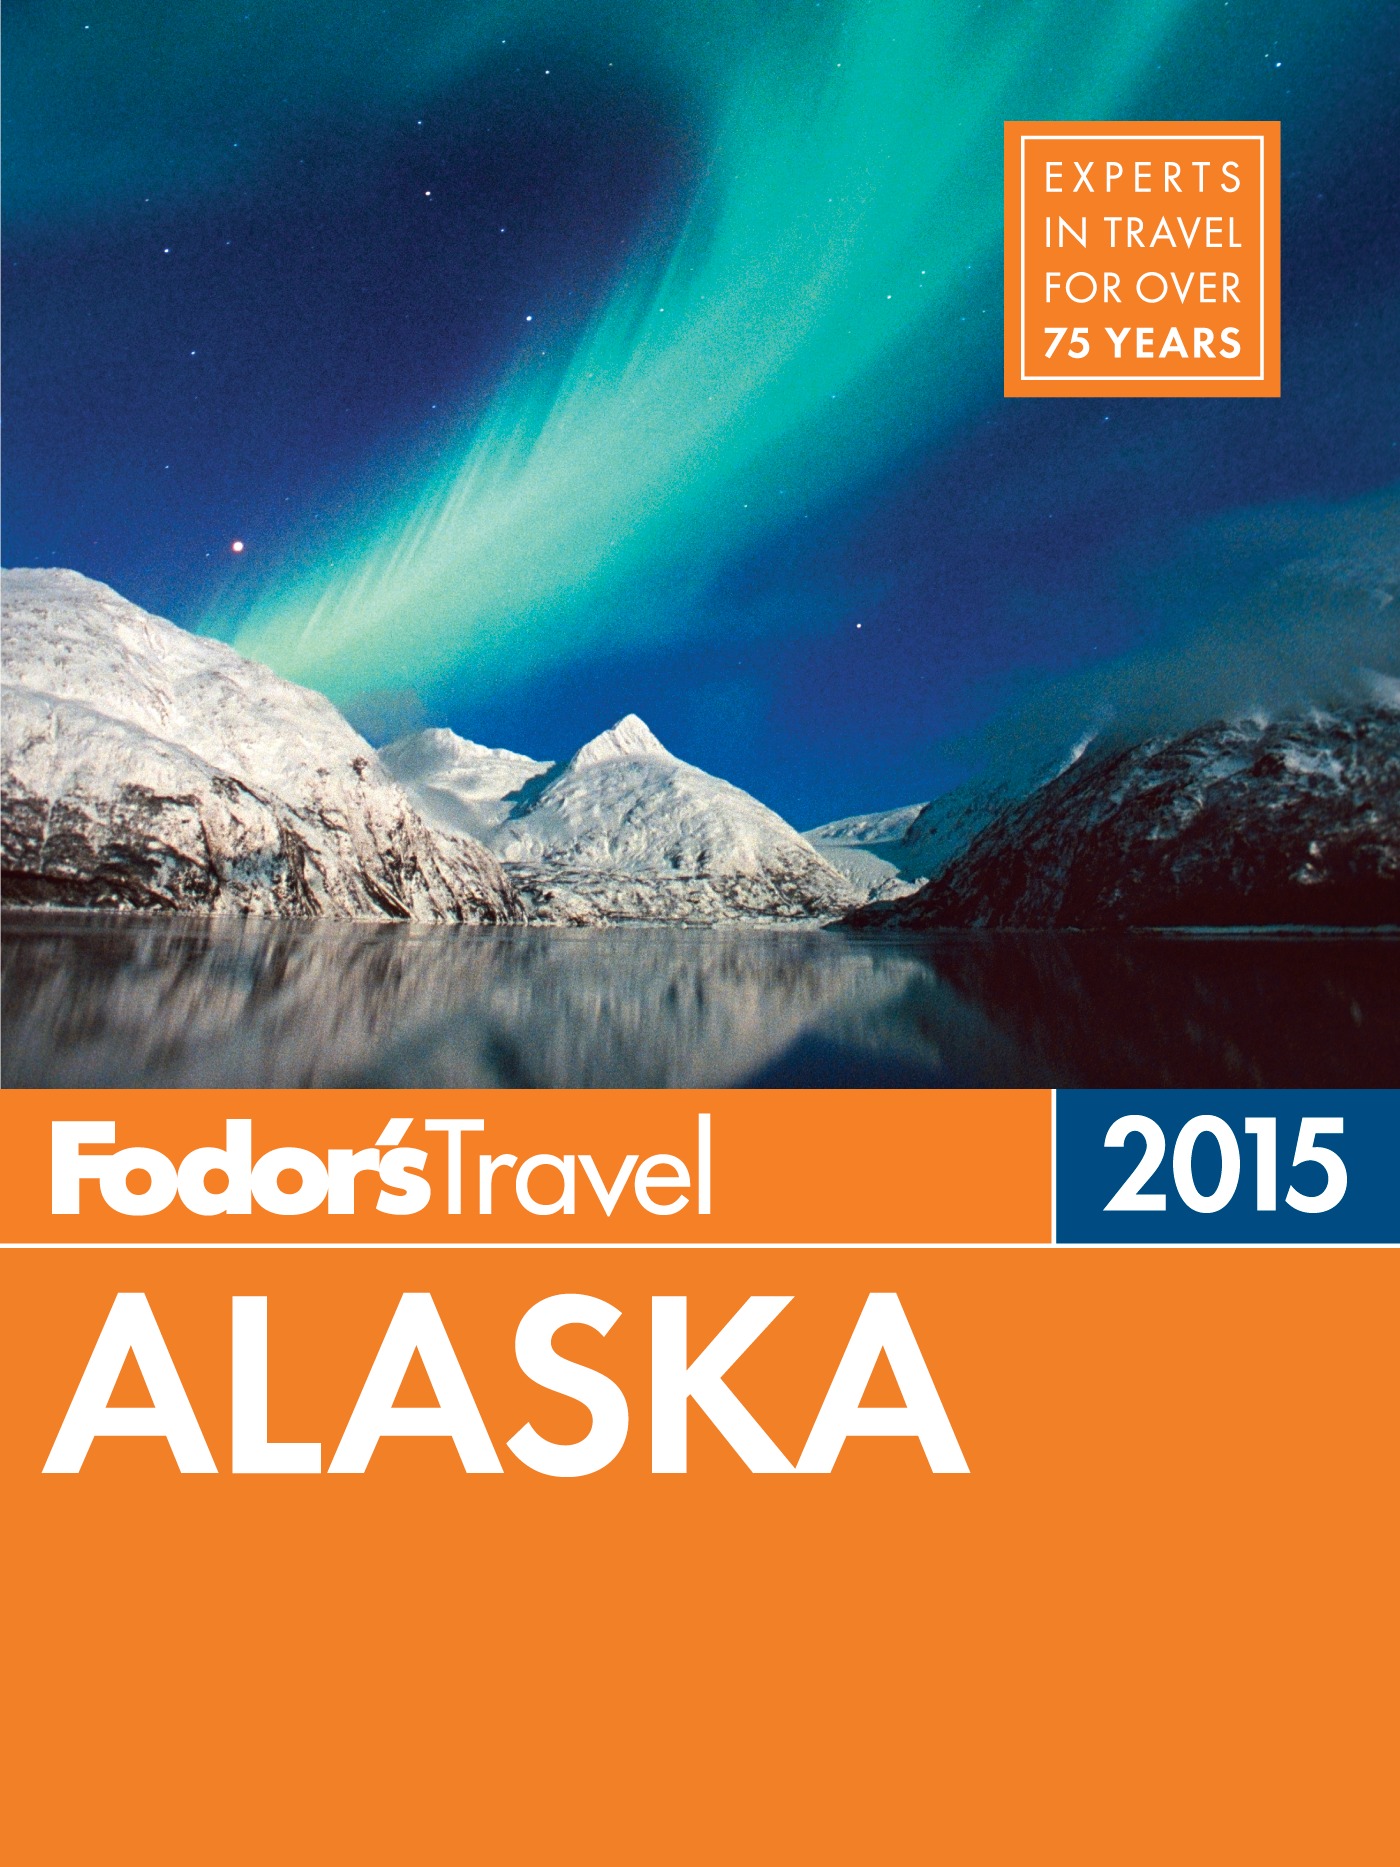 Fodor's Alaska 2015 cover image